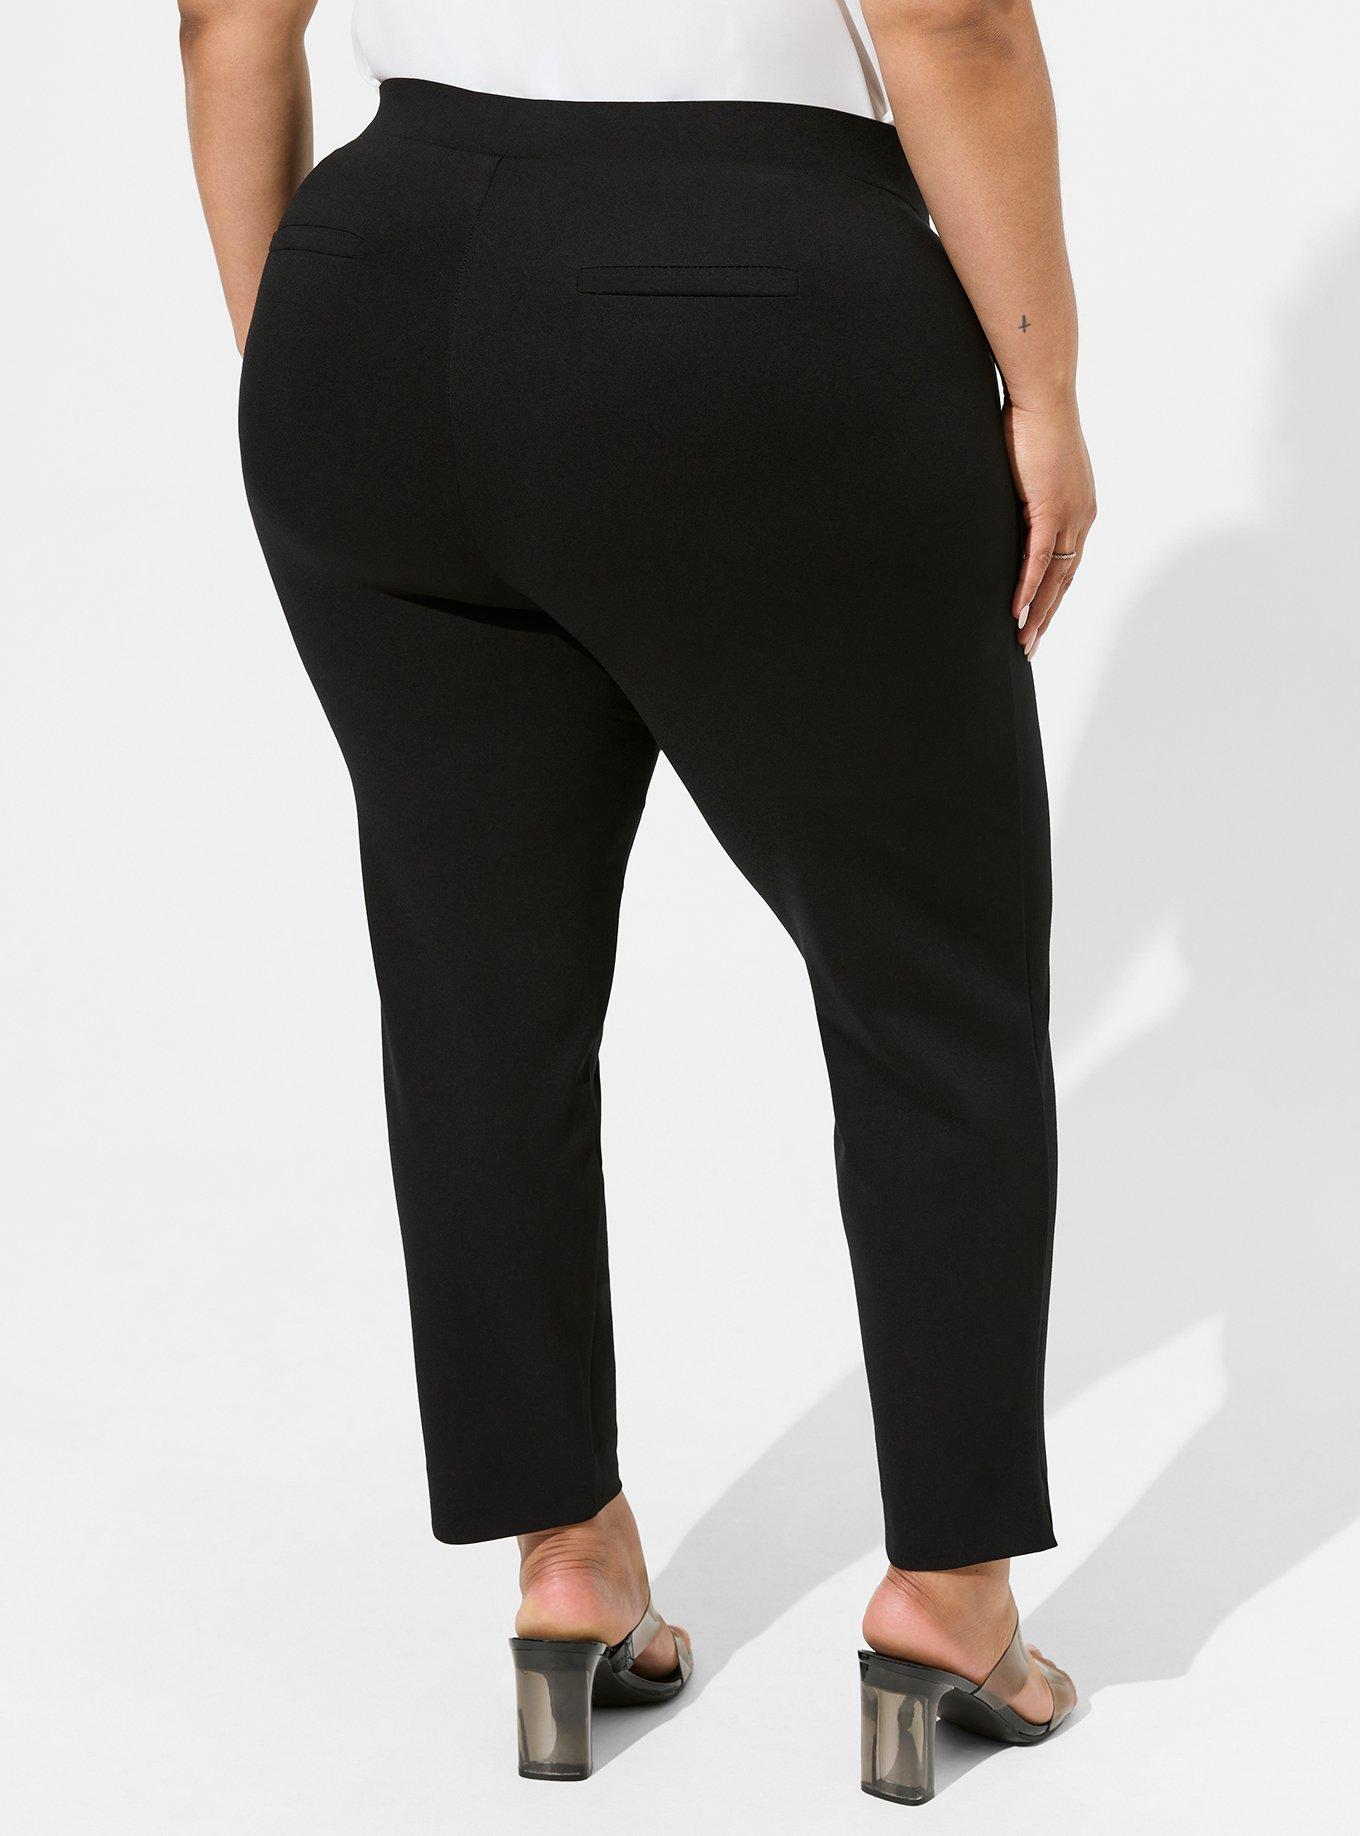 Torrid Women's Black & White Herringbone Ponte Pants Size 1